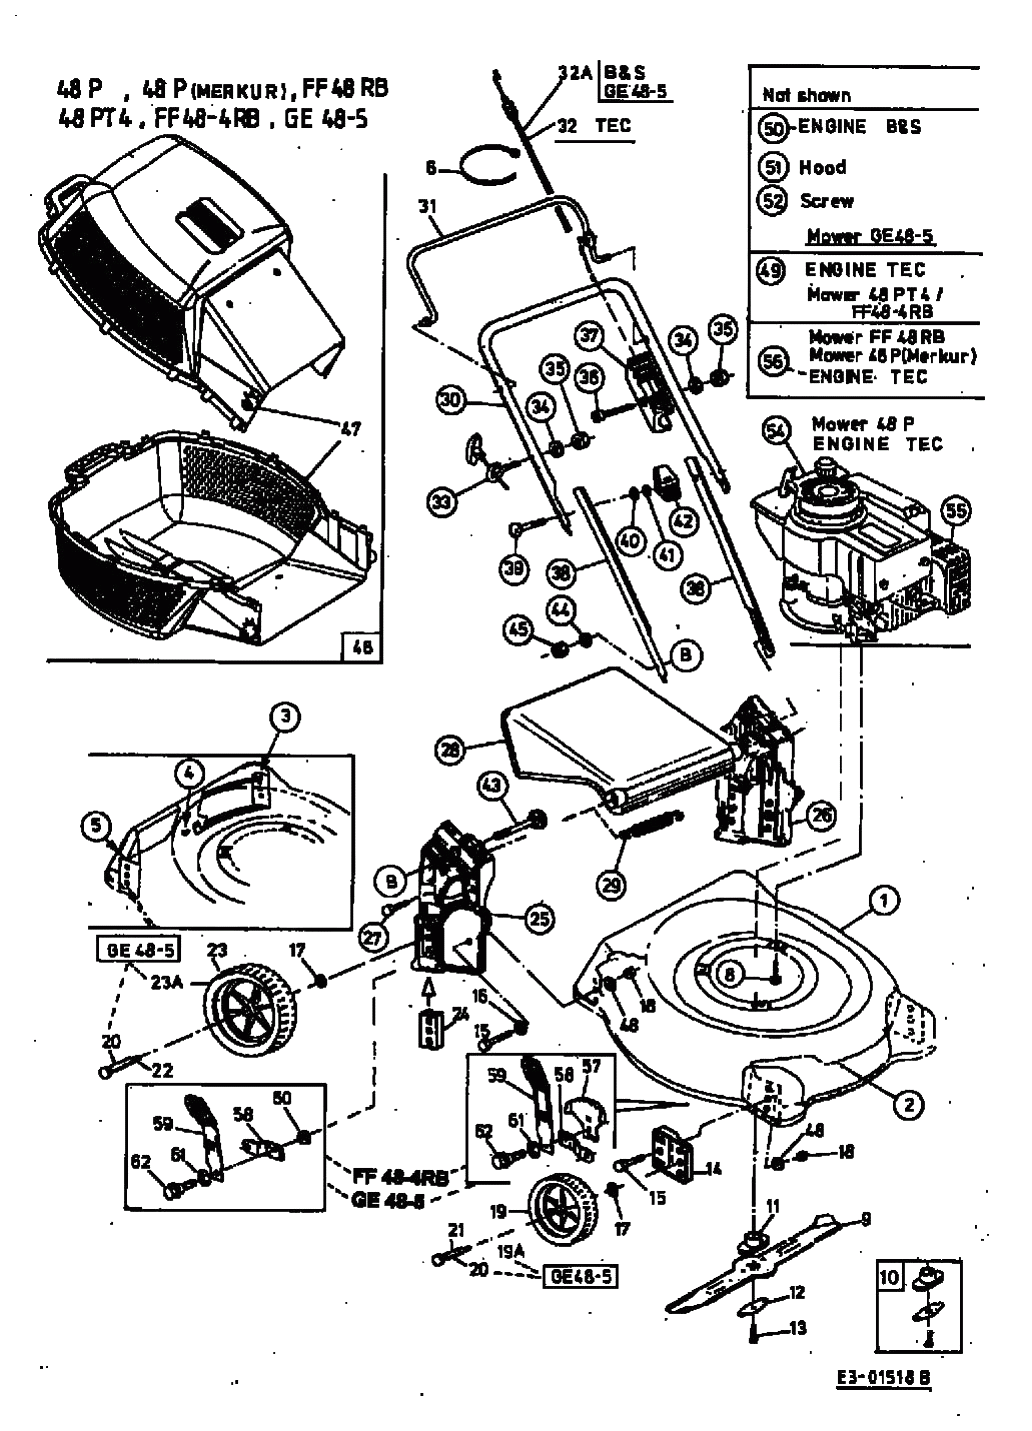 MTD Артикул 11A-V08C600 (год выпуска 2002). Основная деталировка